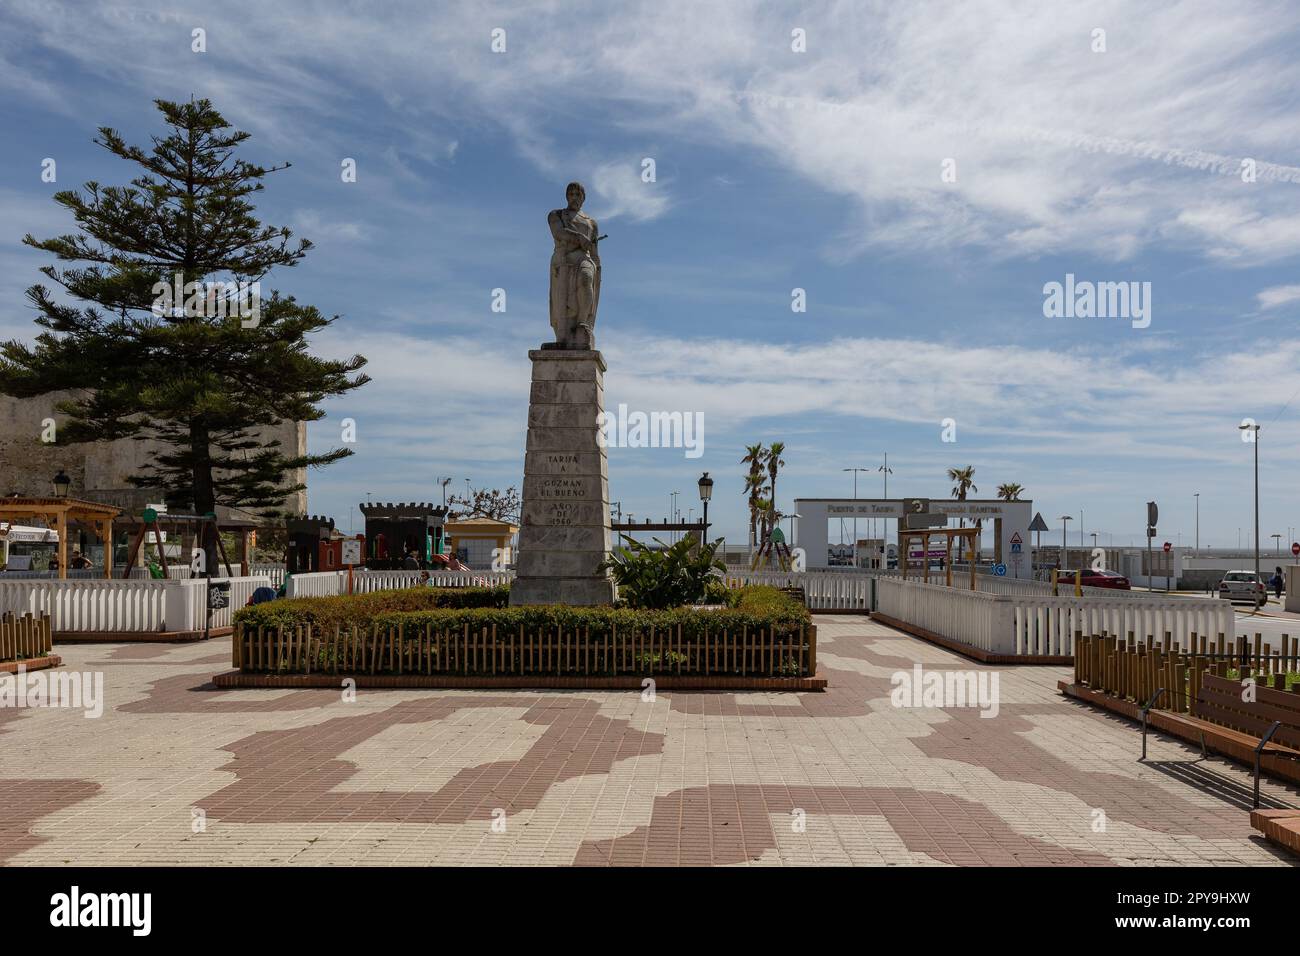 The statue of Guzman el Bueno in Tarifa, Costa de La Luz, spain Stock Photo